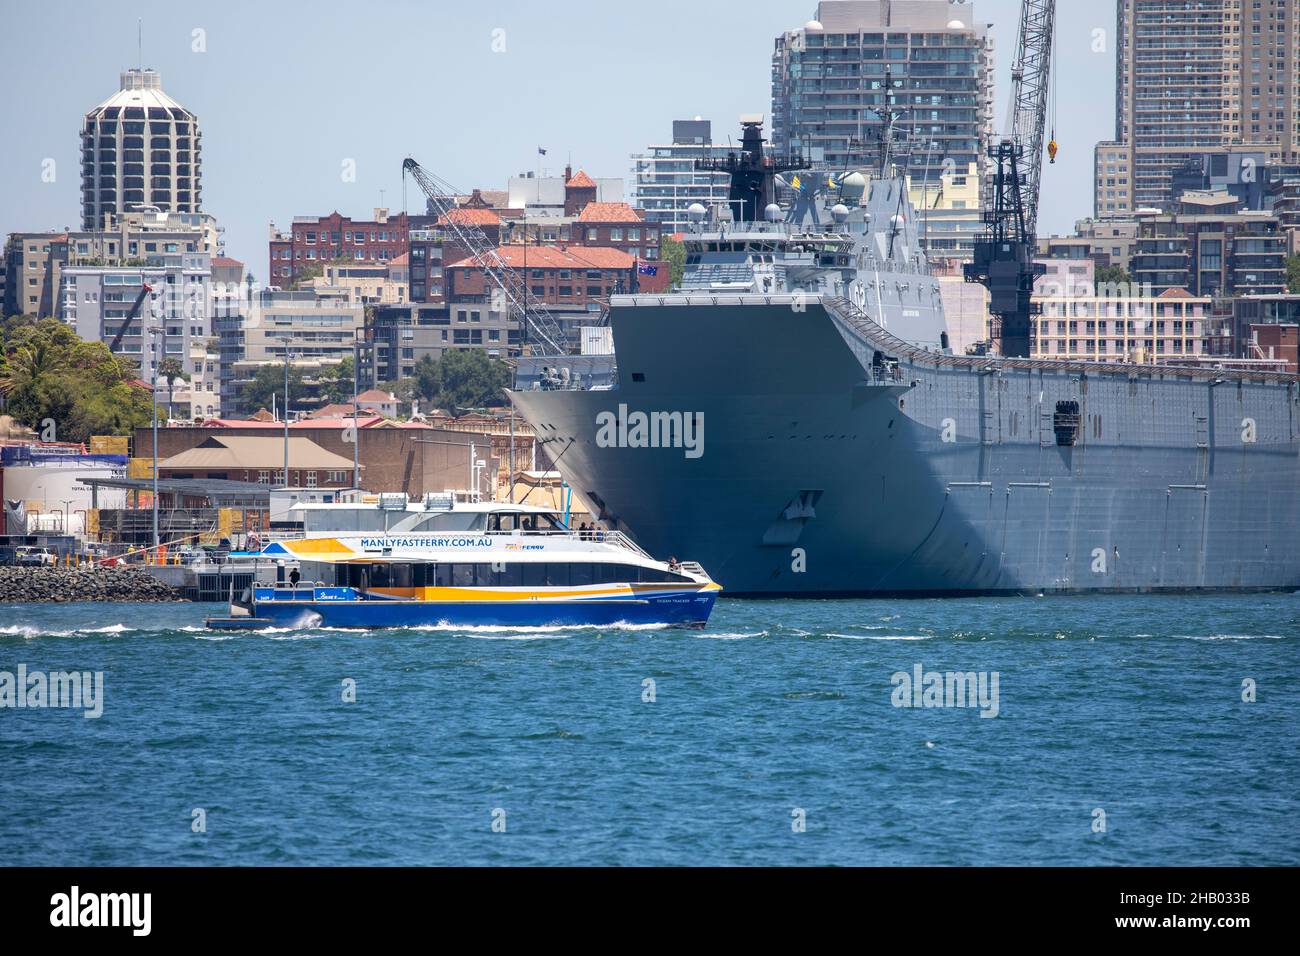 Manly fast ferry passes garden island,australian naval base and HMAS Canberra ship, Sydney, Australia Stock Photo